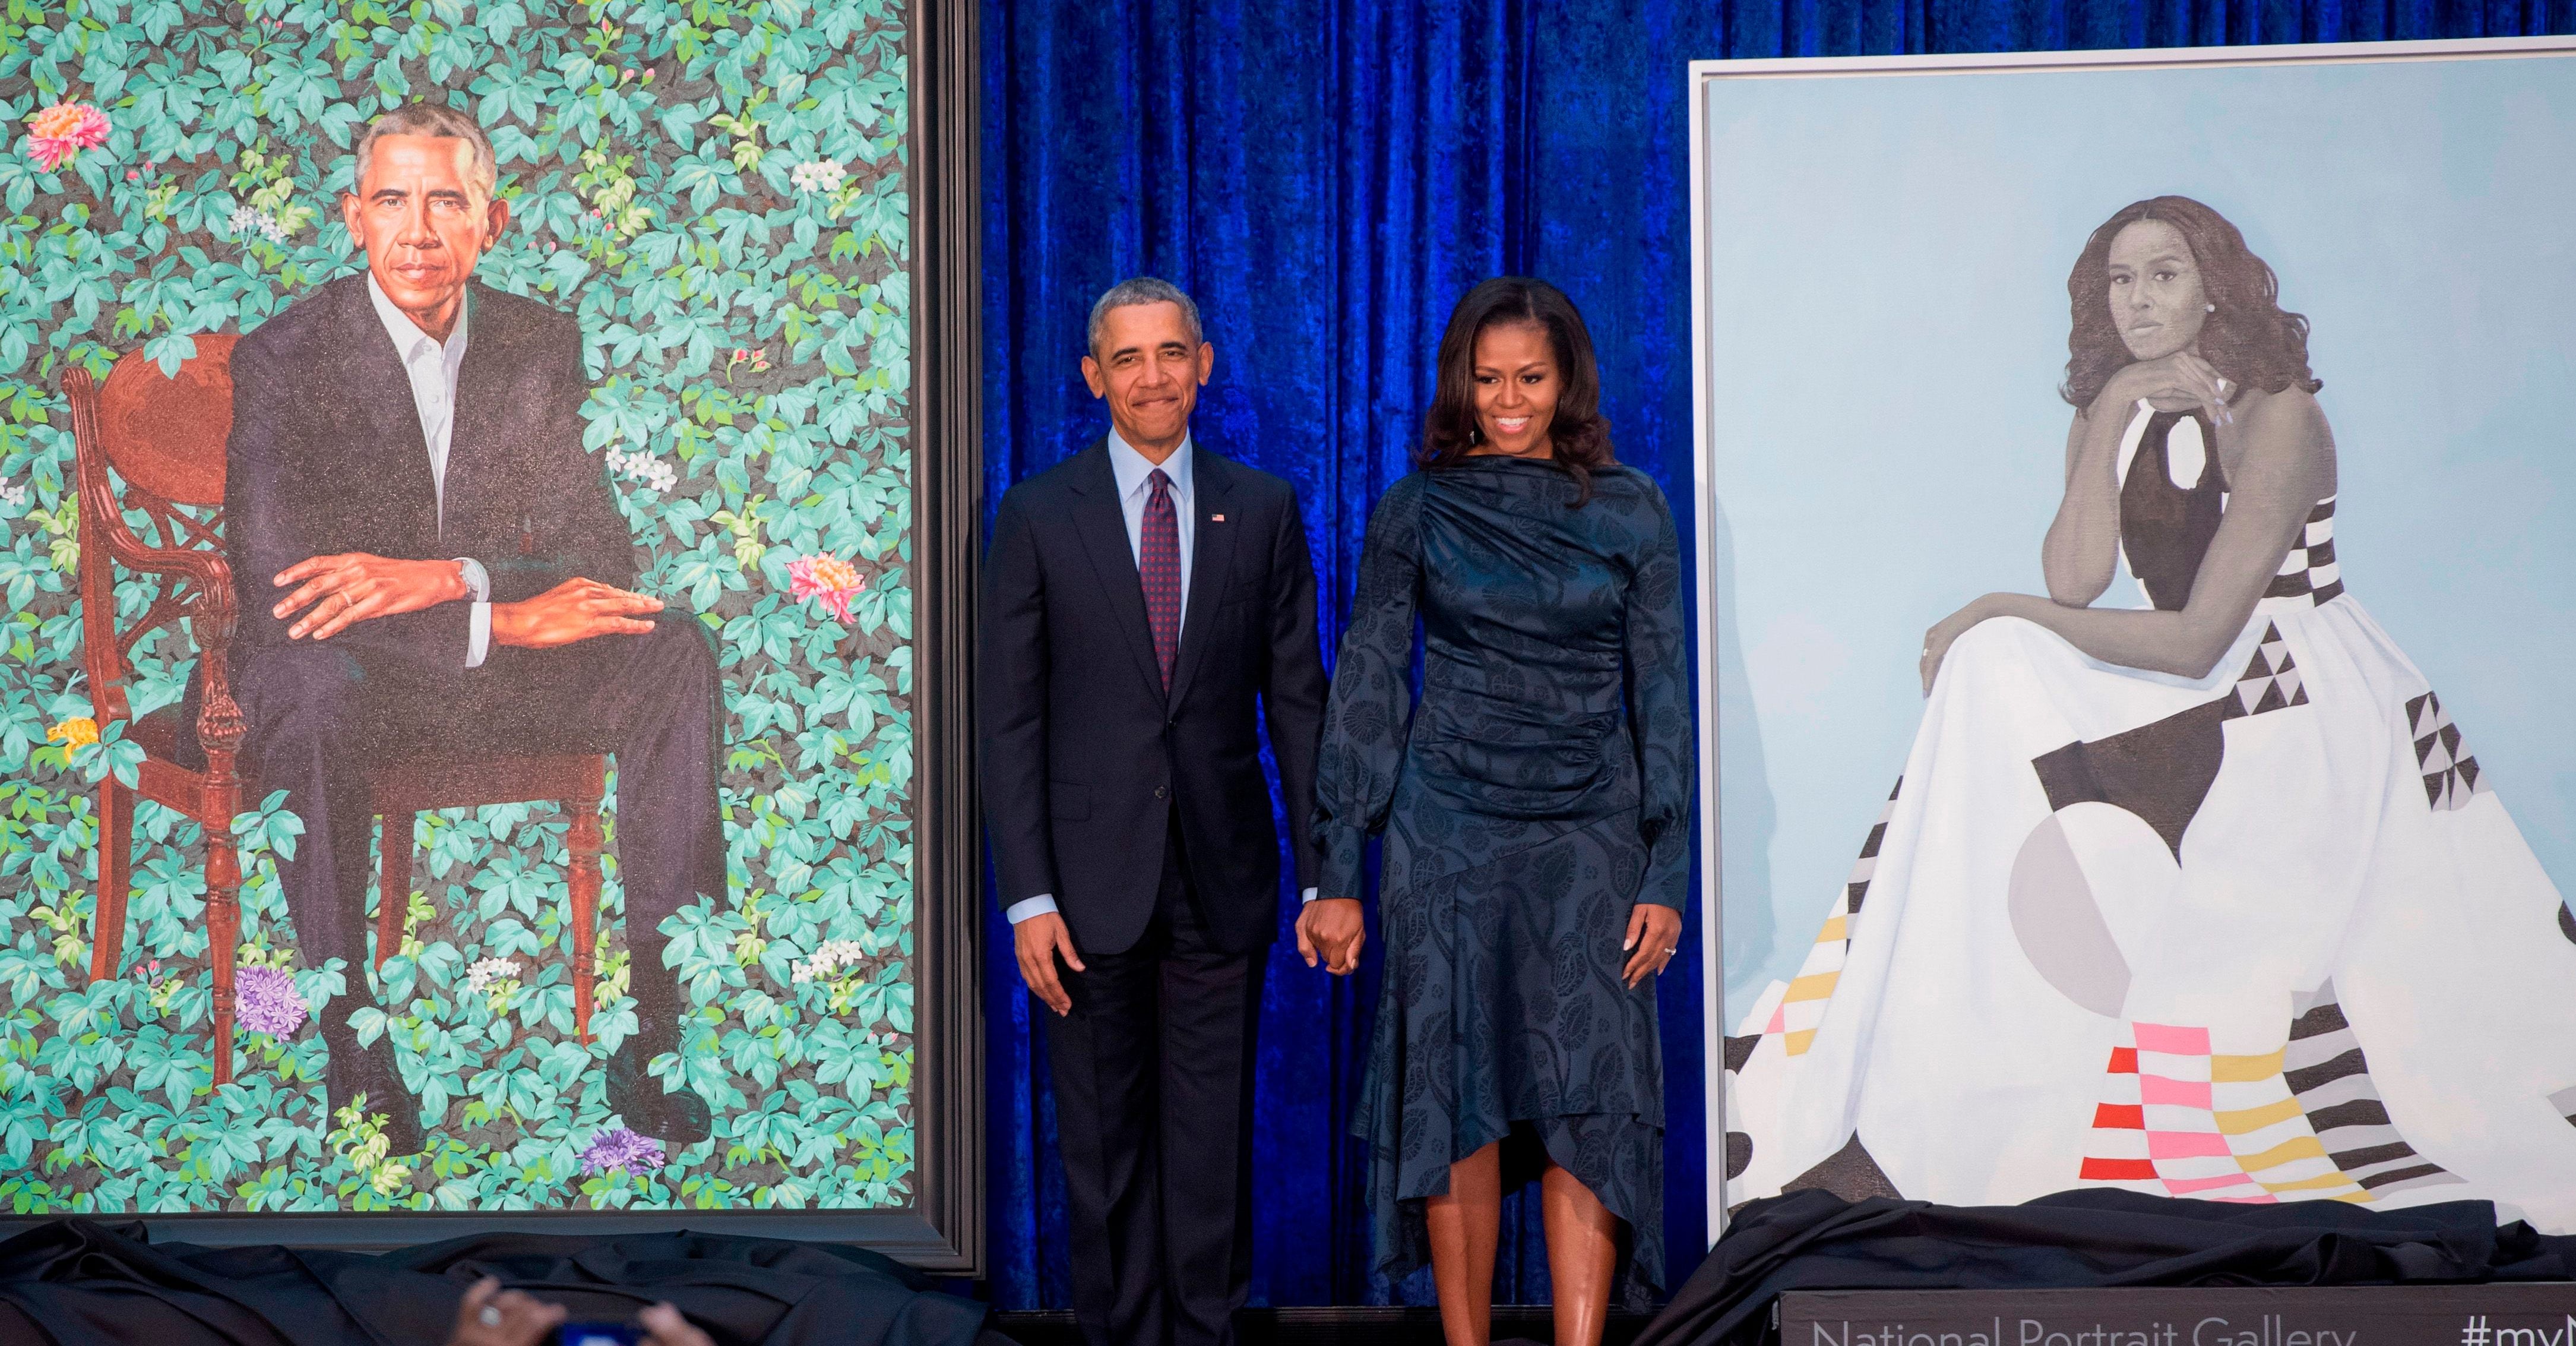 Official Portraits of Barack and Michelle Obama Revealed | POPSUGAR News